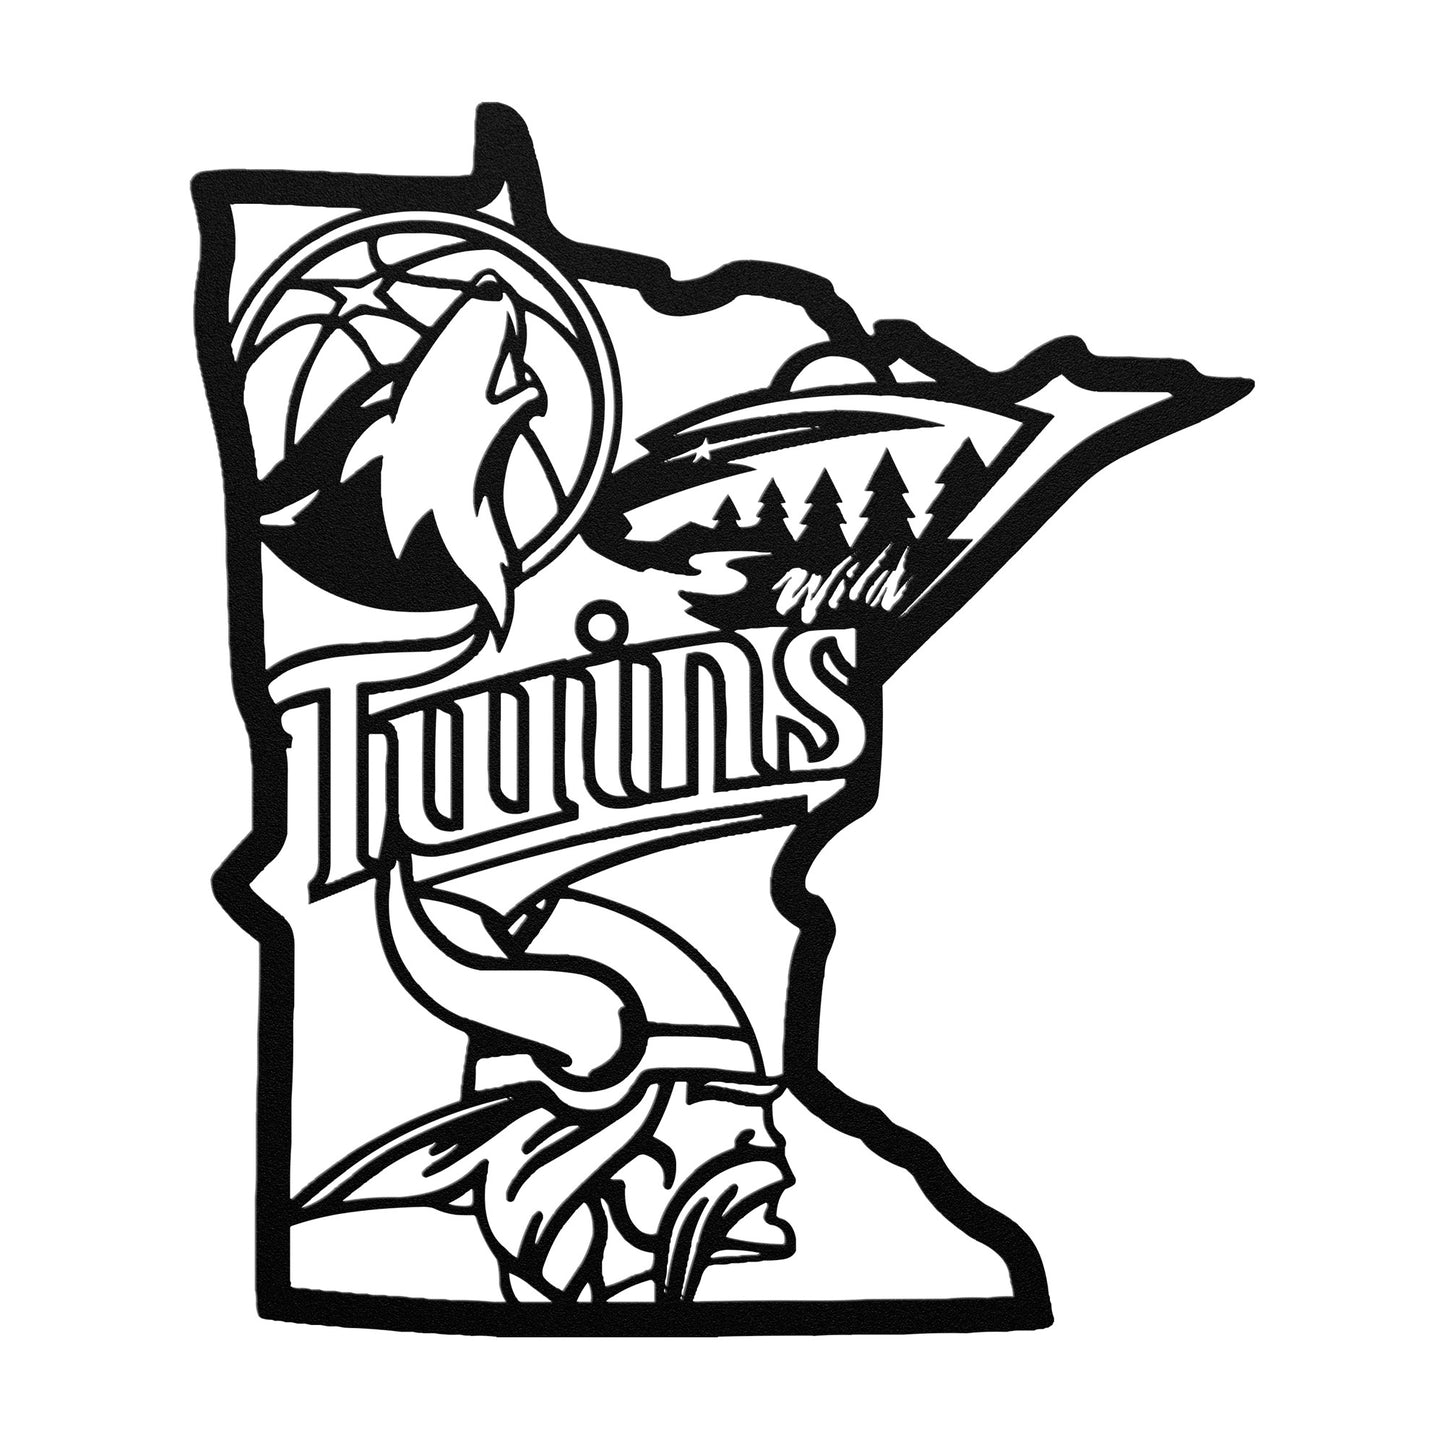 Minnesota Sports teams in State